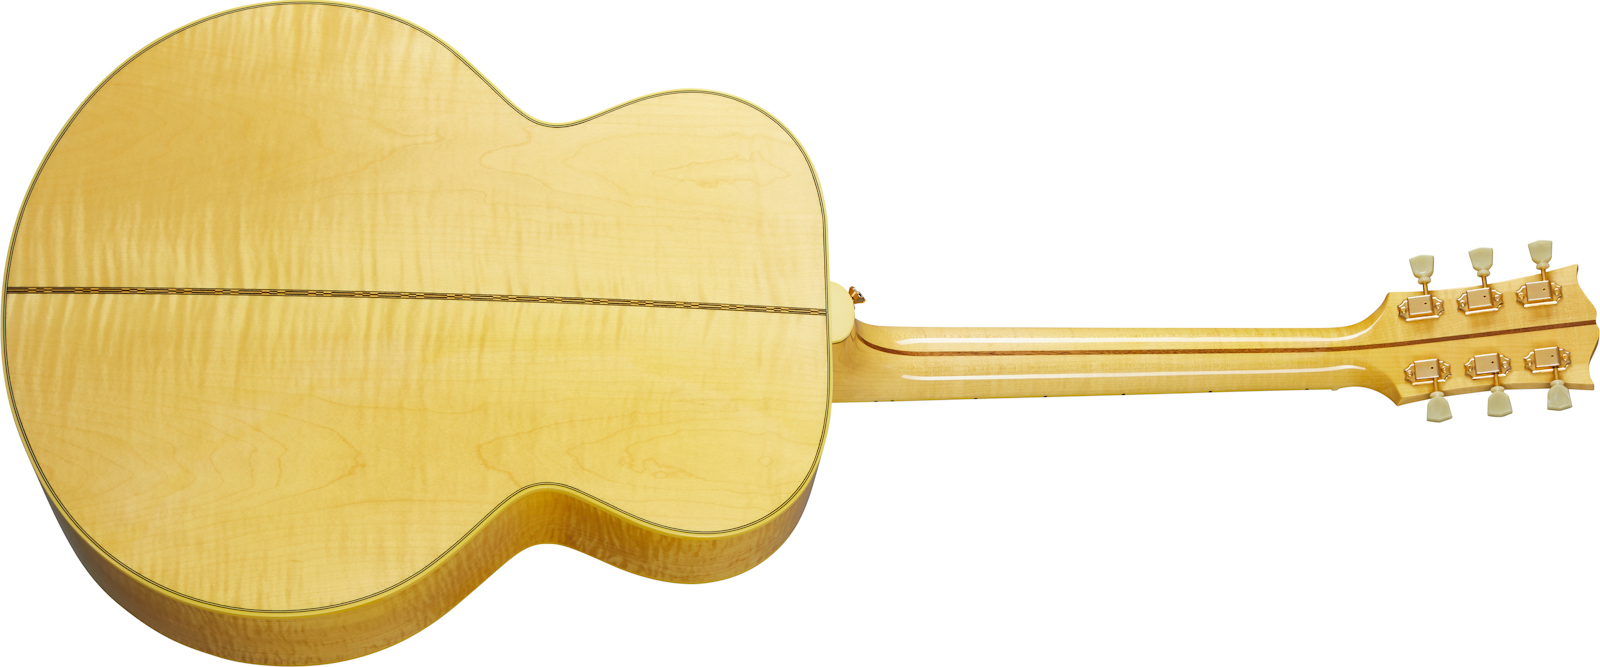 Gibson Sj-200 Original 2020 Super Jumbo Epicea Erable Rw - Antique Natural - Guitarra electro acustica - Variation 1